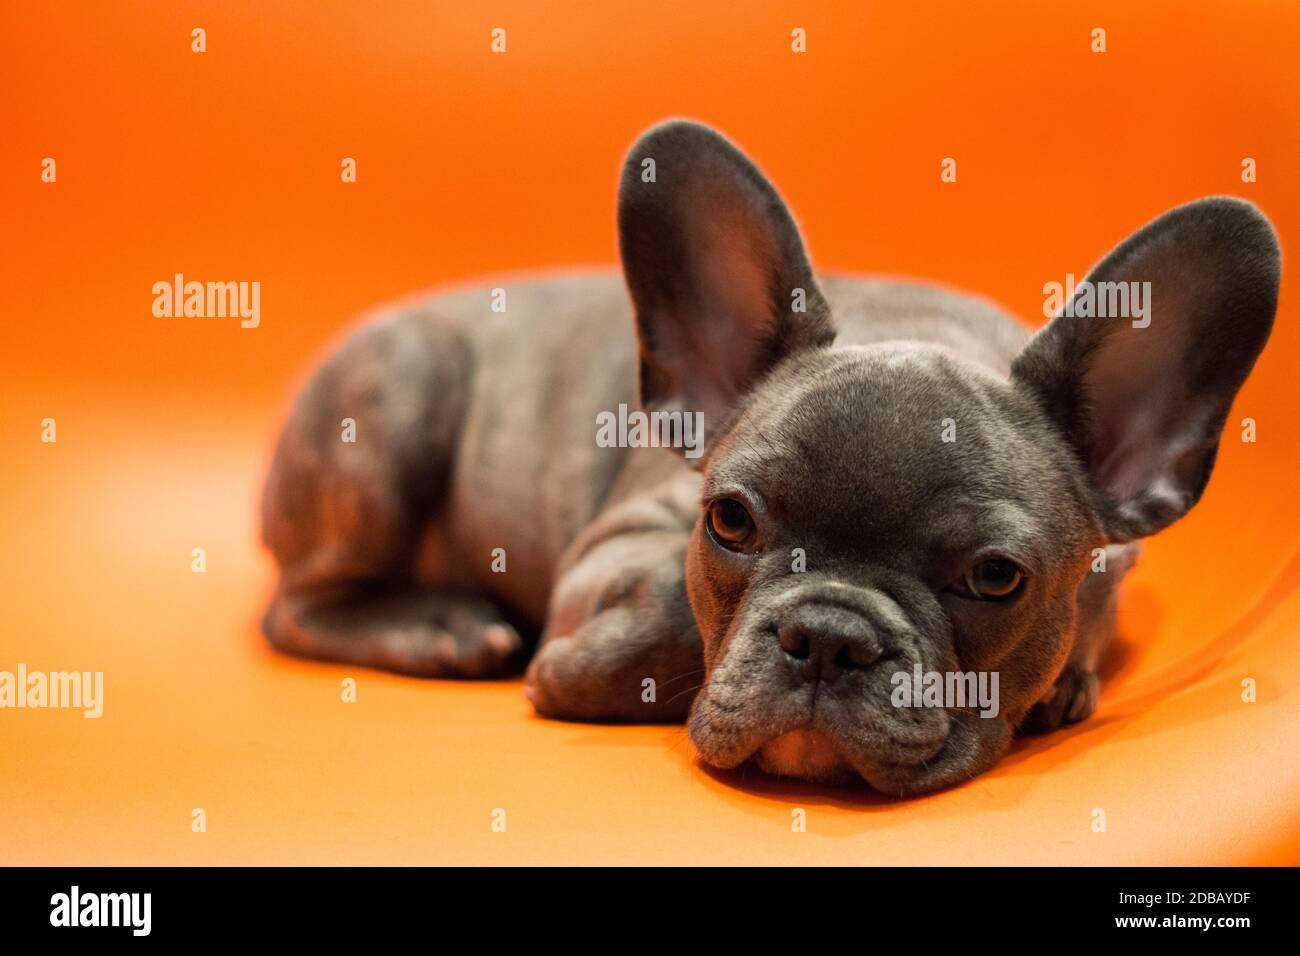 Dog wallpapers fotografías e imágenes de alta resolución - Alamy